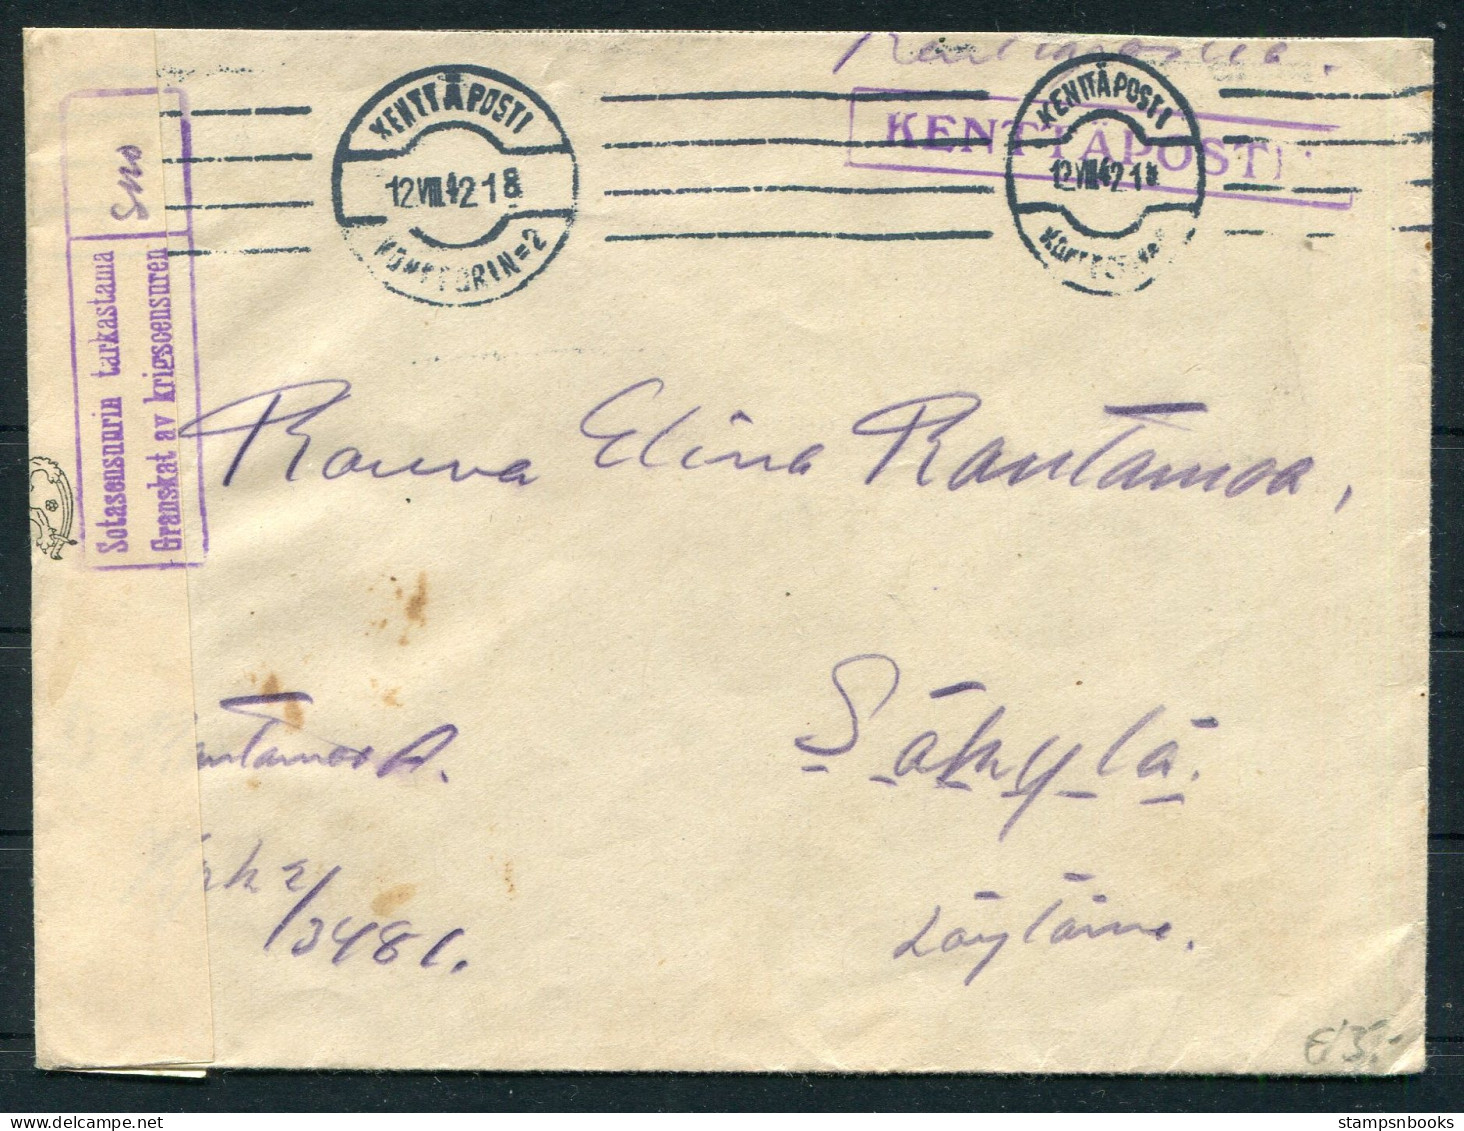 1942 Finland Kenttapostia Fieldpost Censor Cover - Sakyla - Briefe U. Dokumente